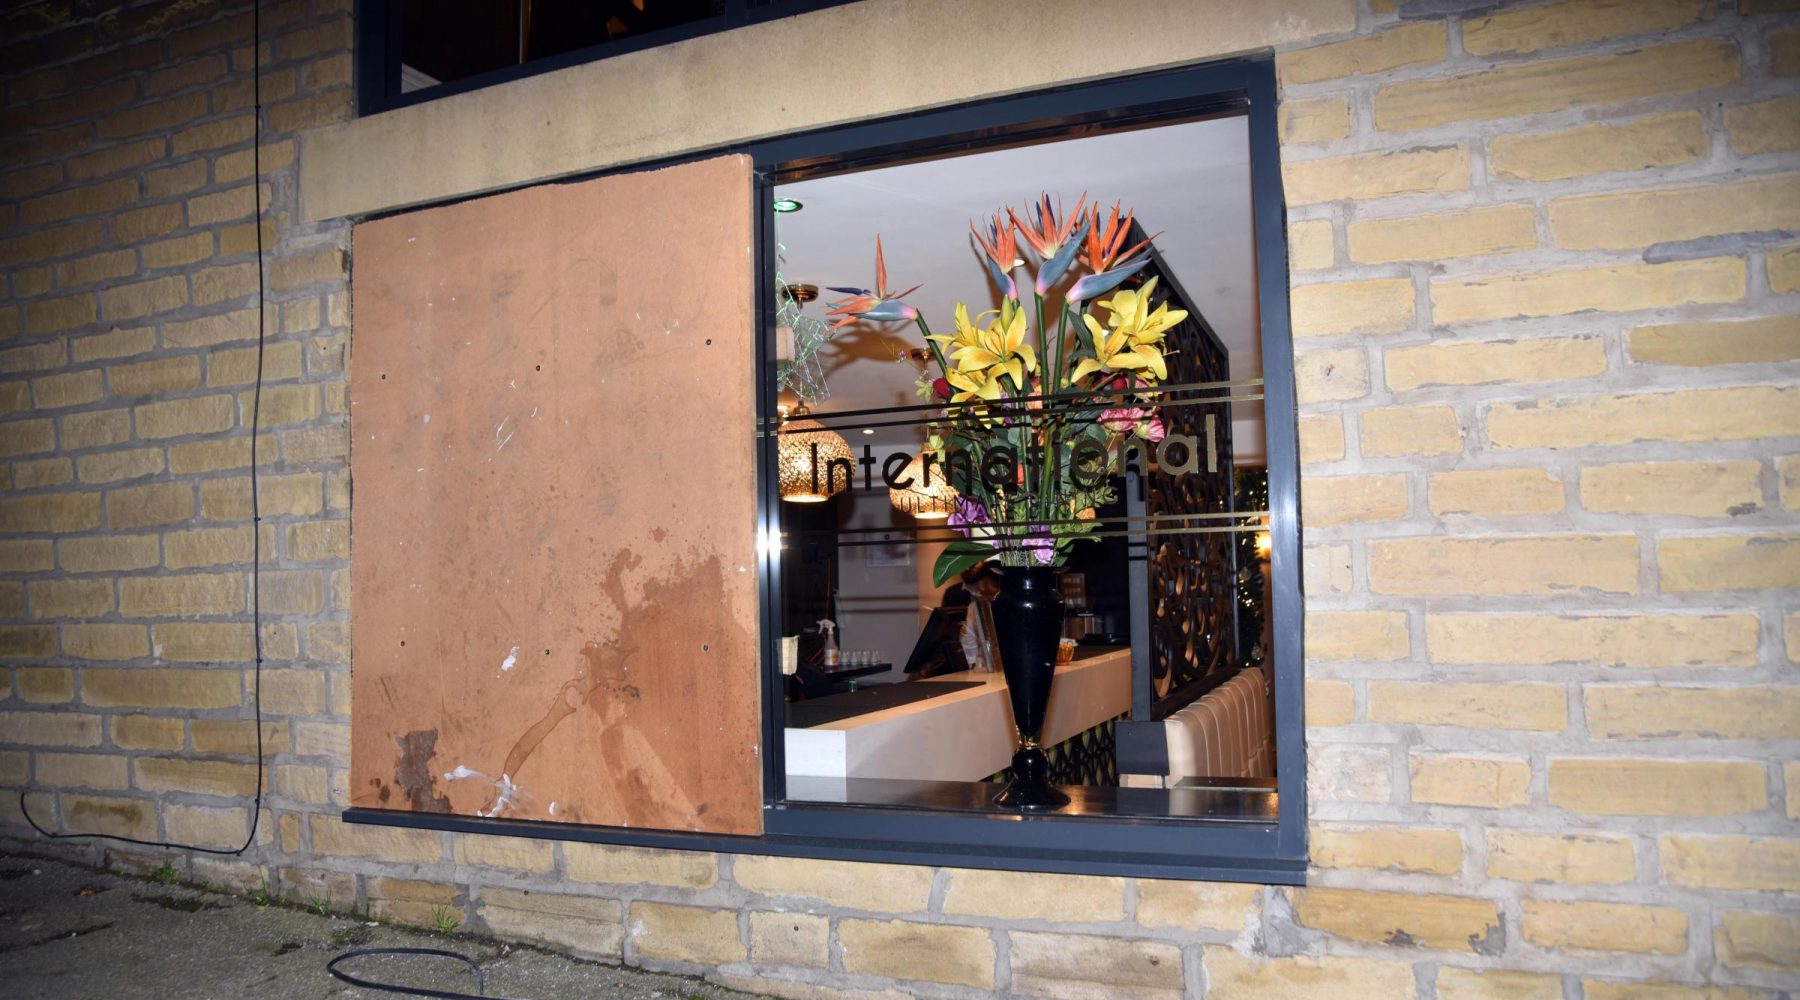 International Restaurant hit by attempted break-in